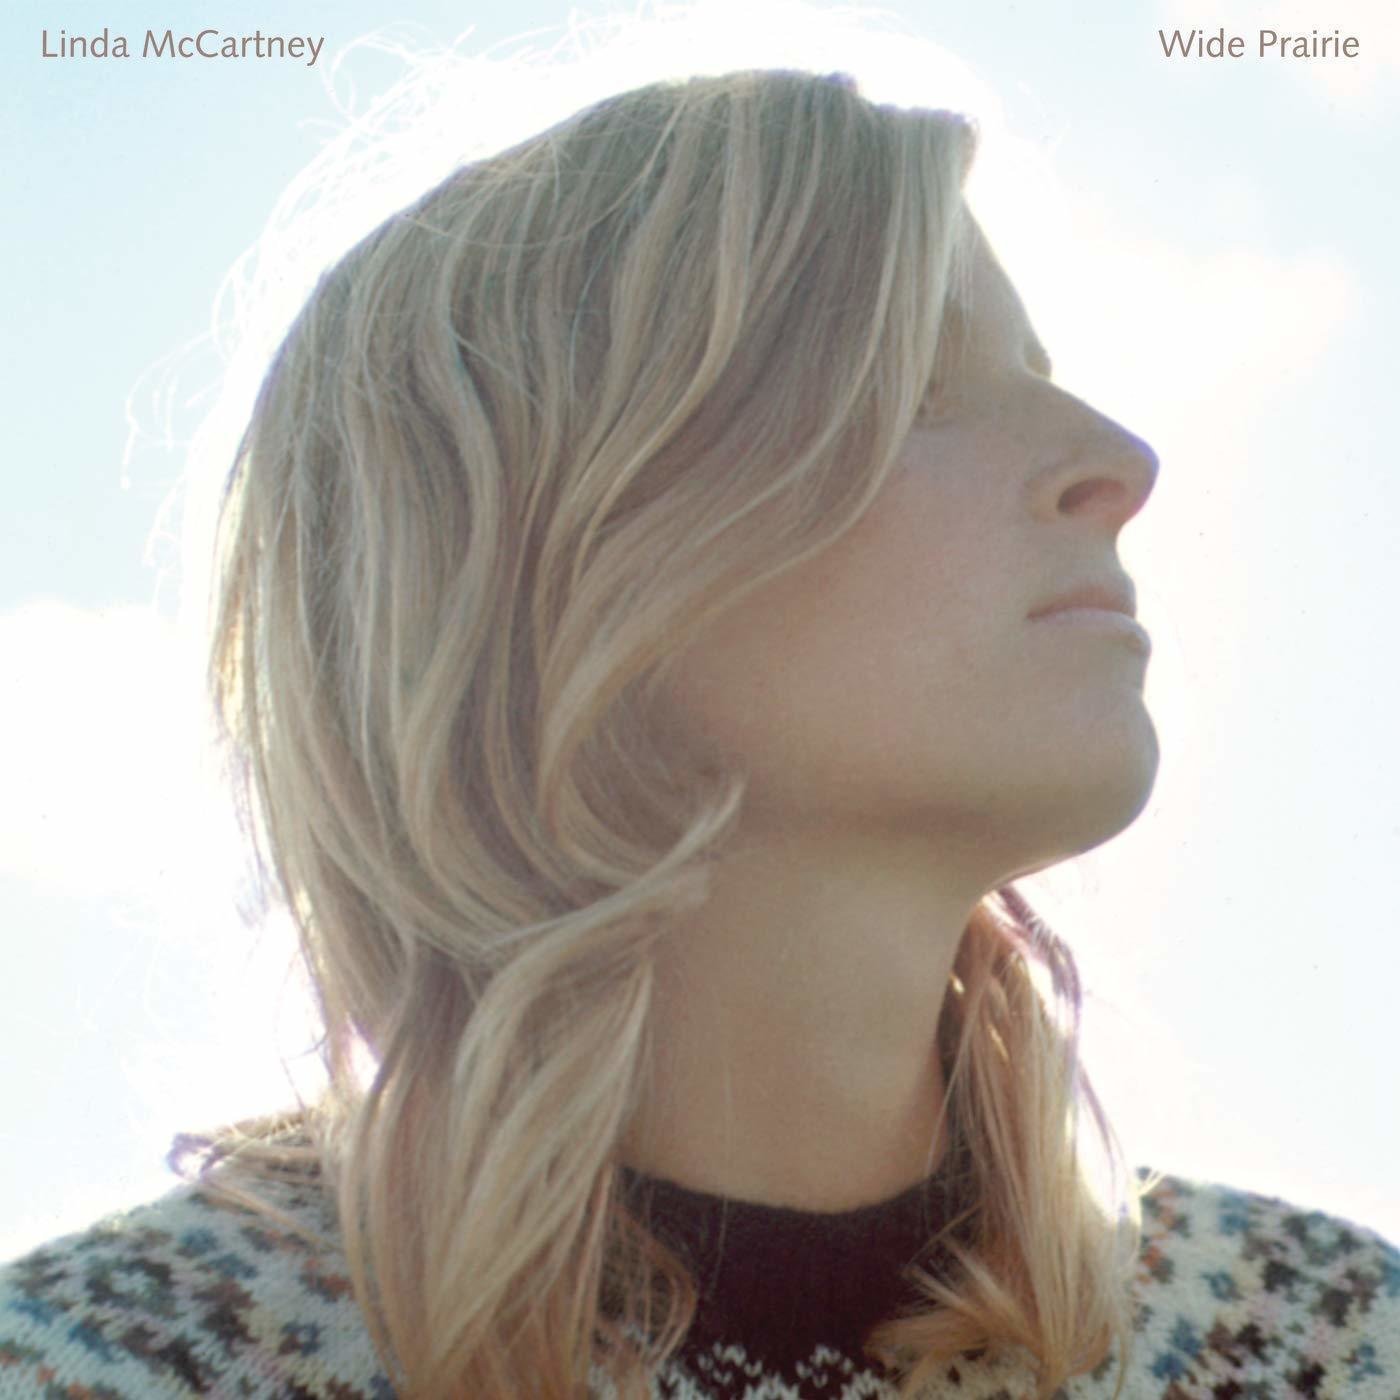 Płyta winylowa Linda McCartney - Wide Prairie (LP)